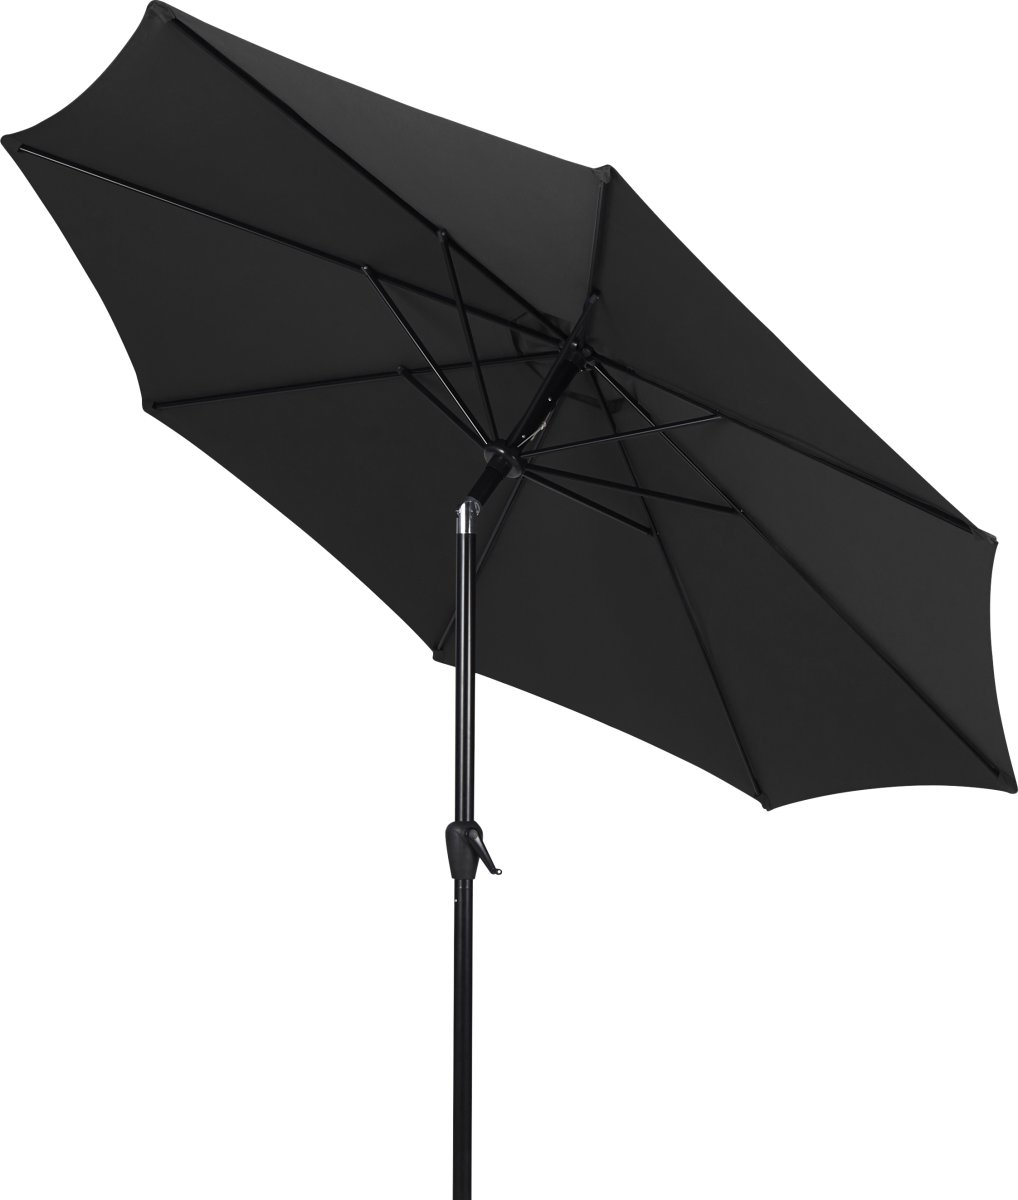 Felix parasol m/krank og tilt, Ø3 m, sort